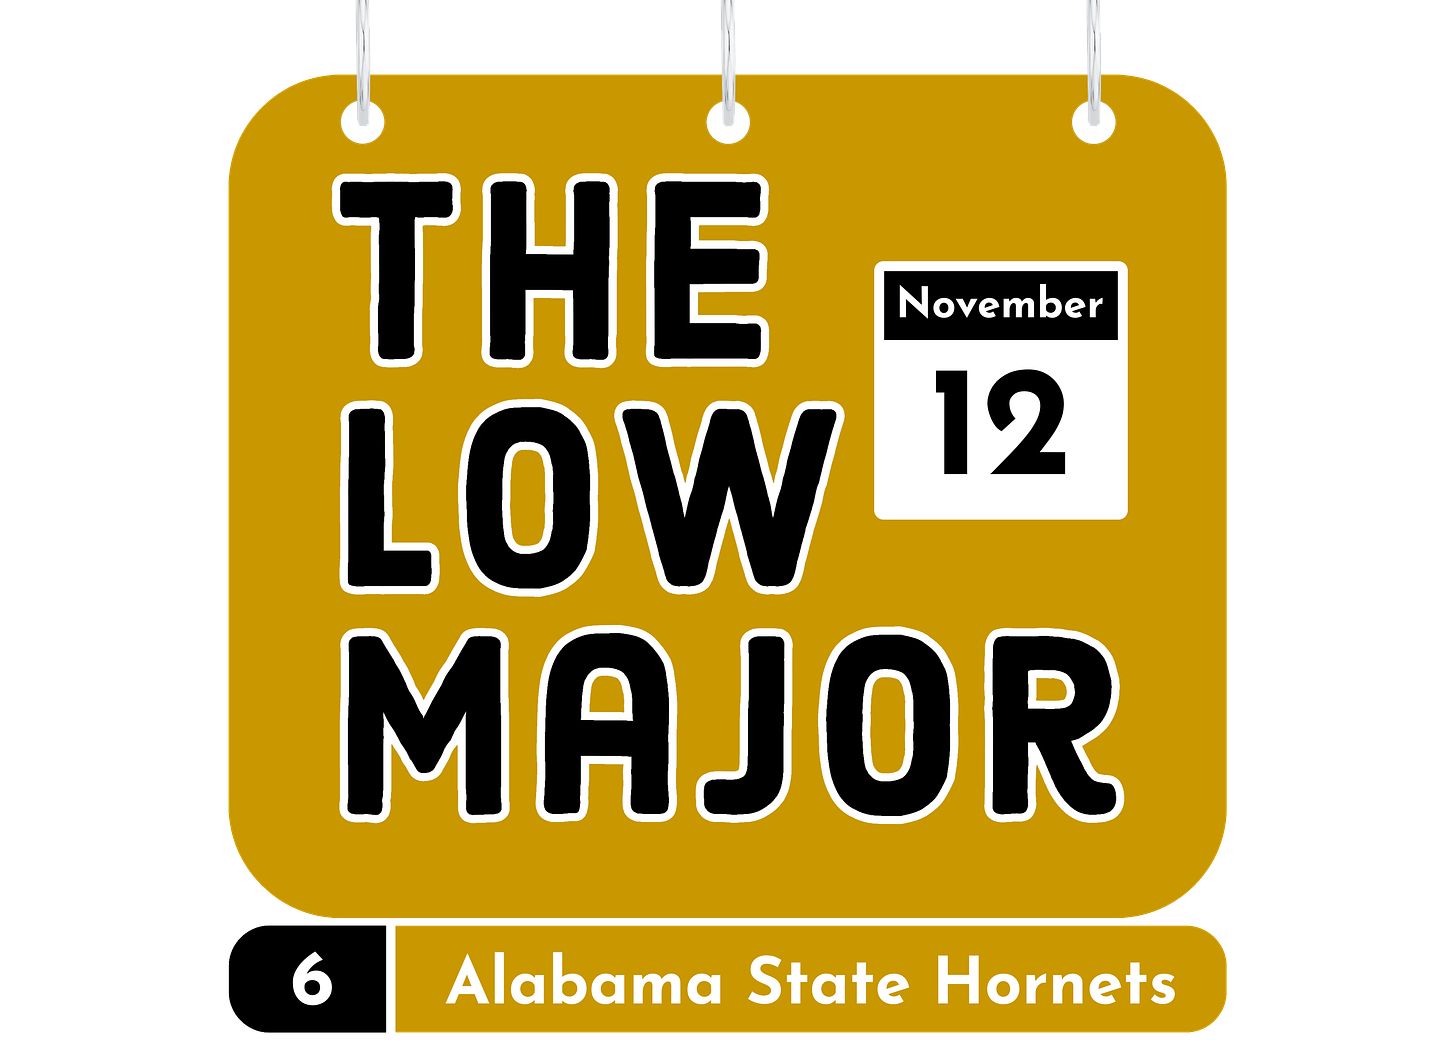 Name-a-Day Alabama State logo